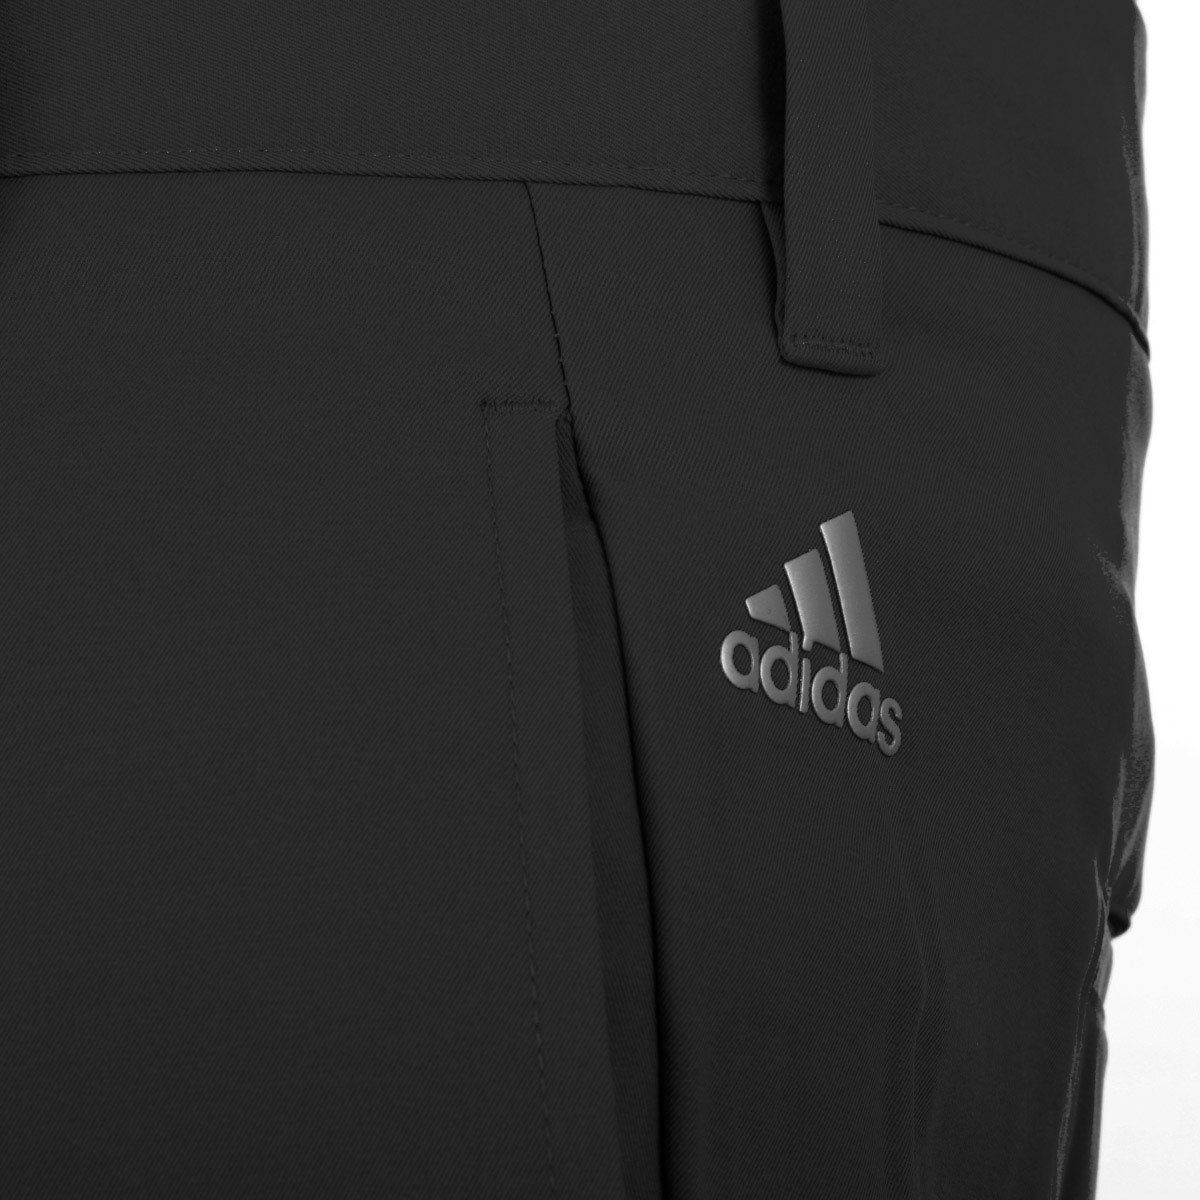 adidas golf trousers black